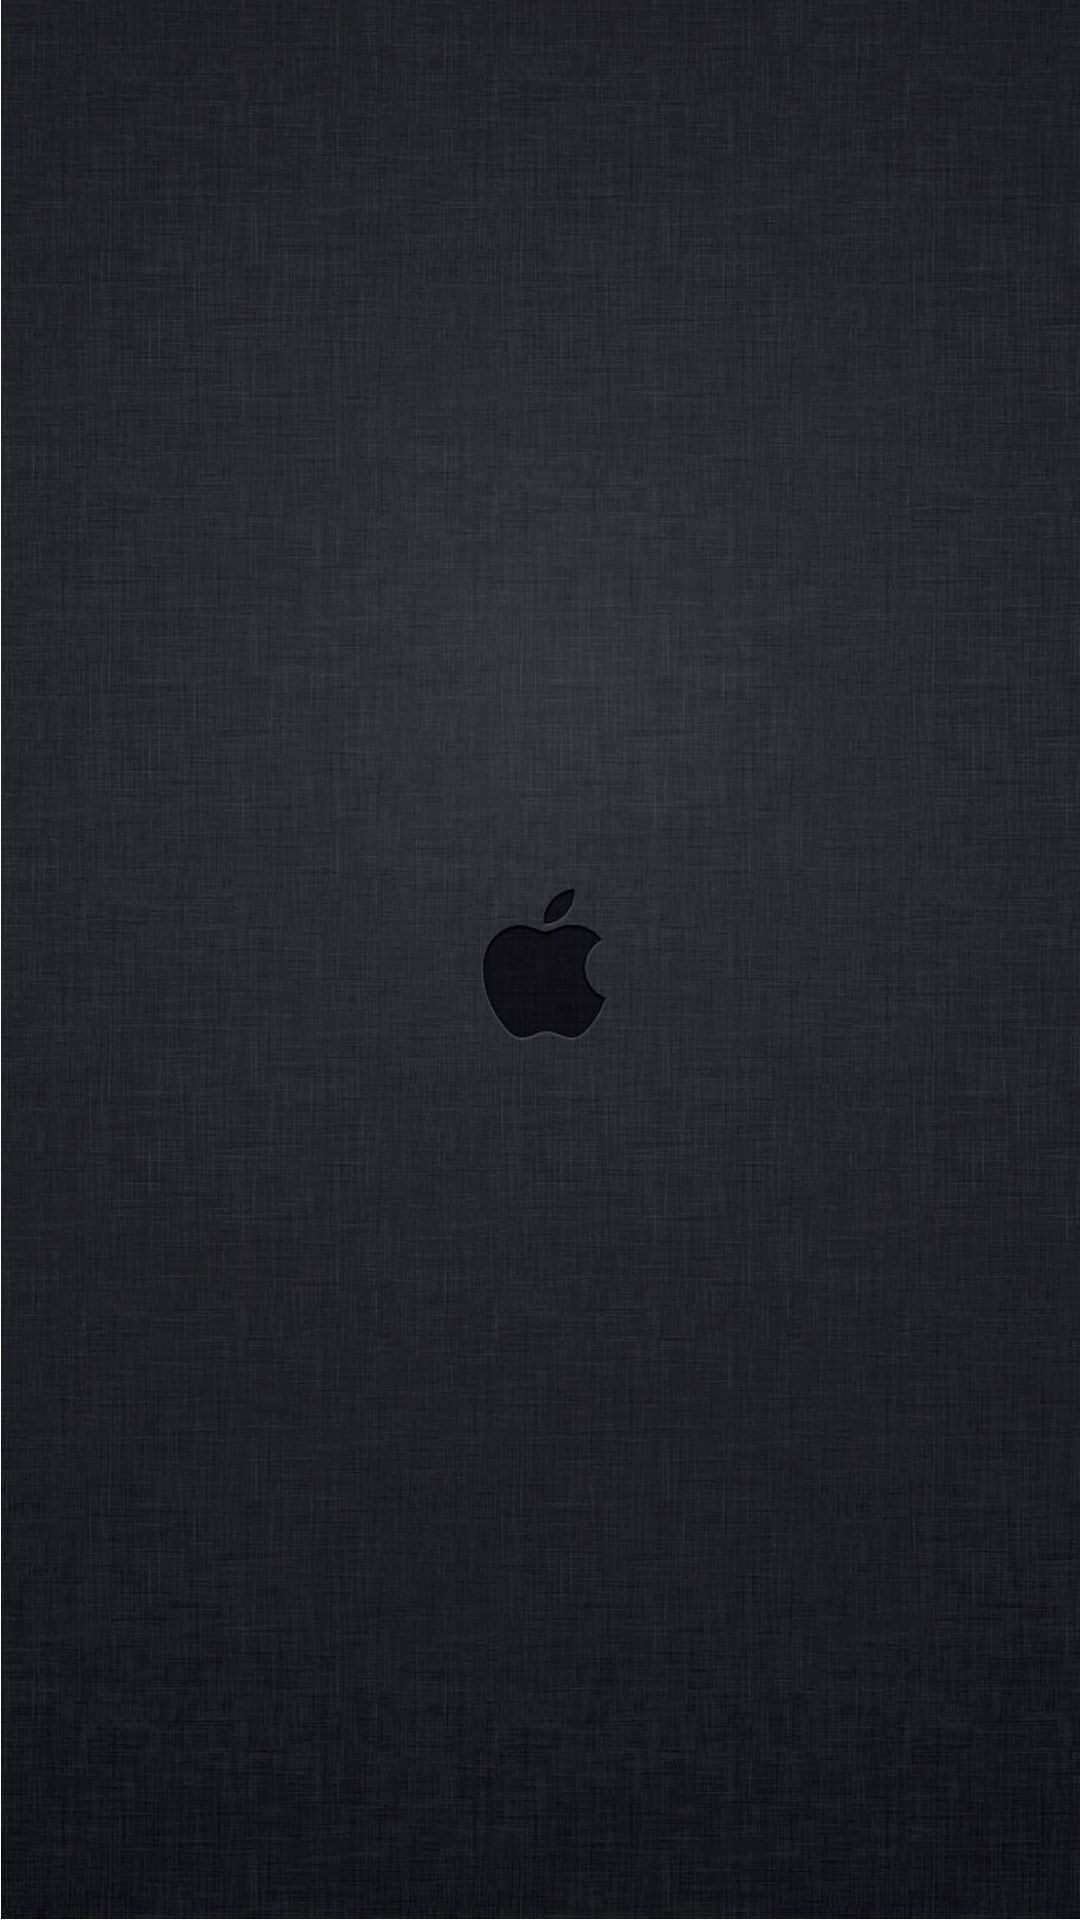 Best of Macintosh Apple Logo Wallpaper. Tap image for more